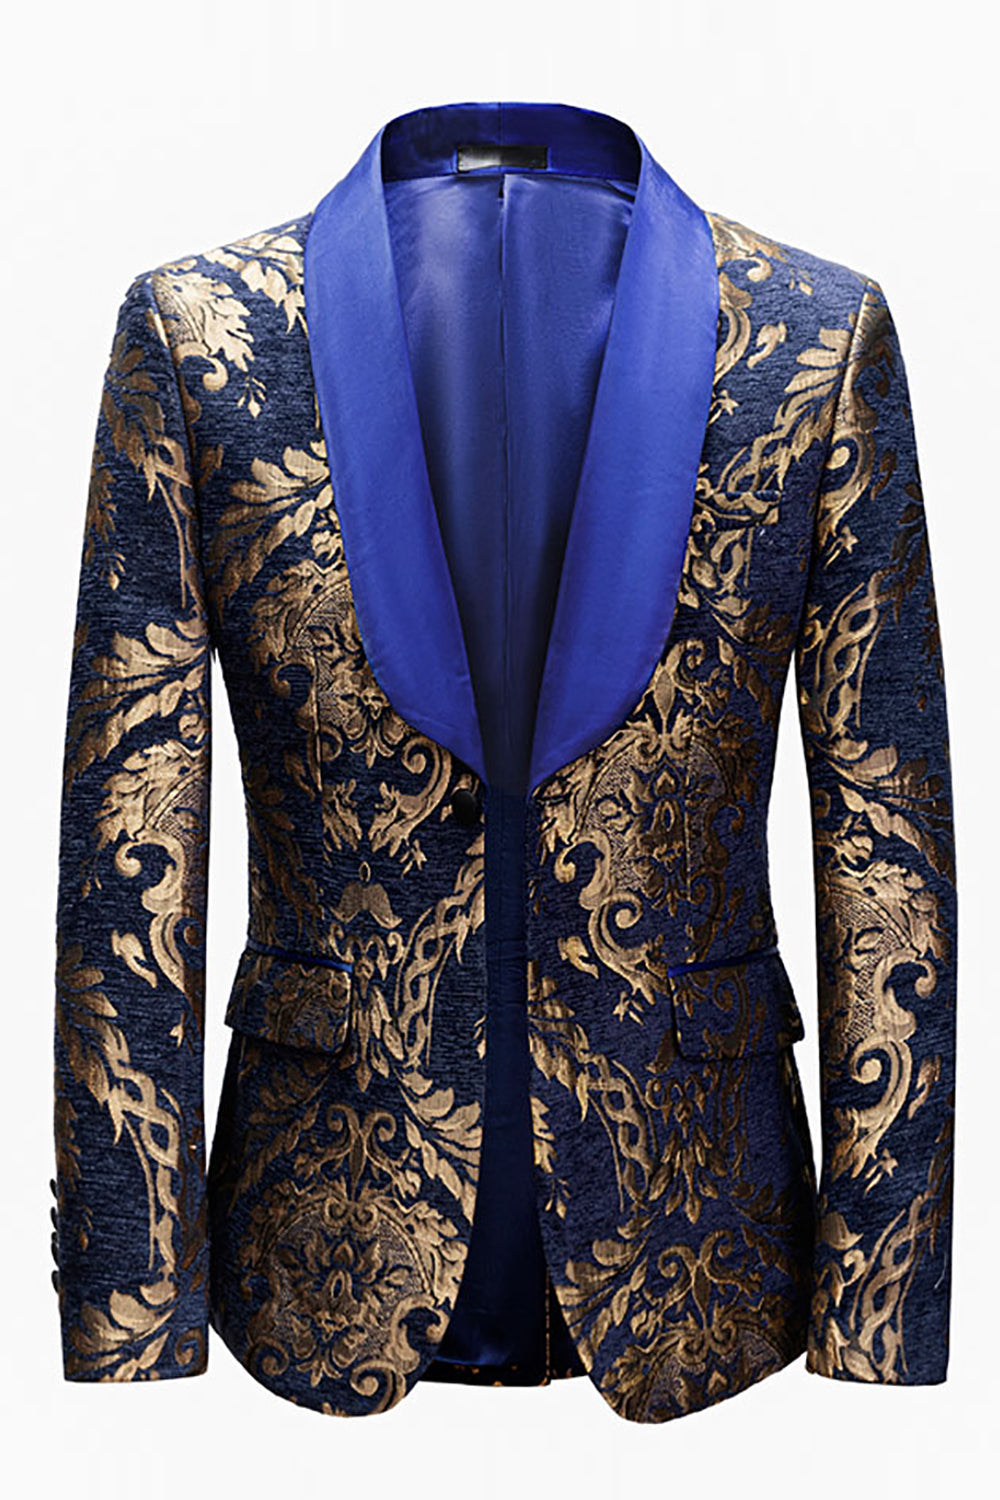 Zapaka Royal Blue Men's Blazer With Golden Jacquard – ZAPAKA